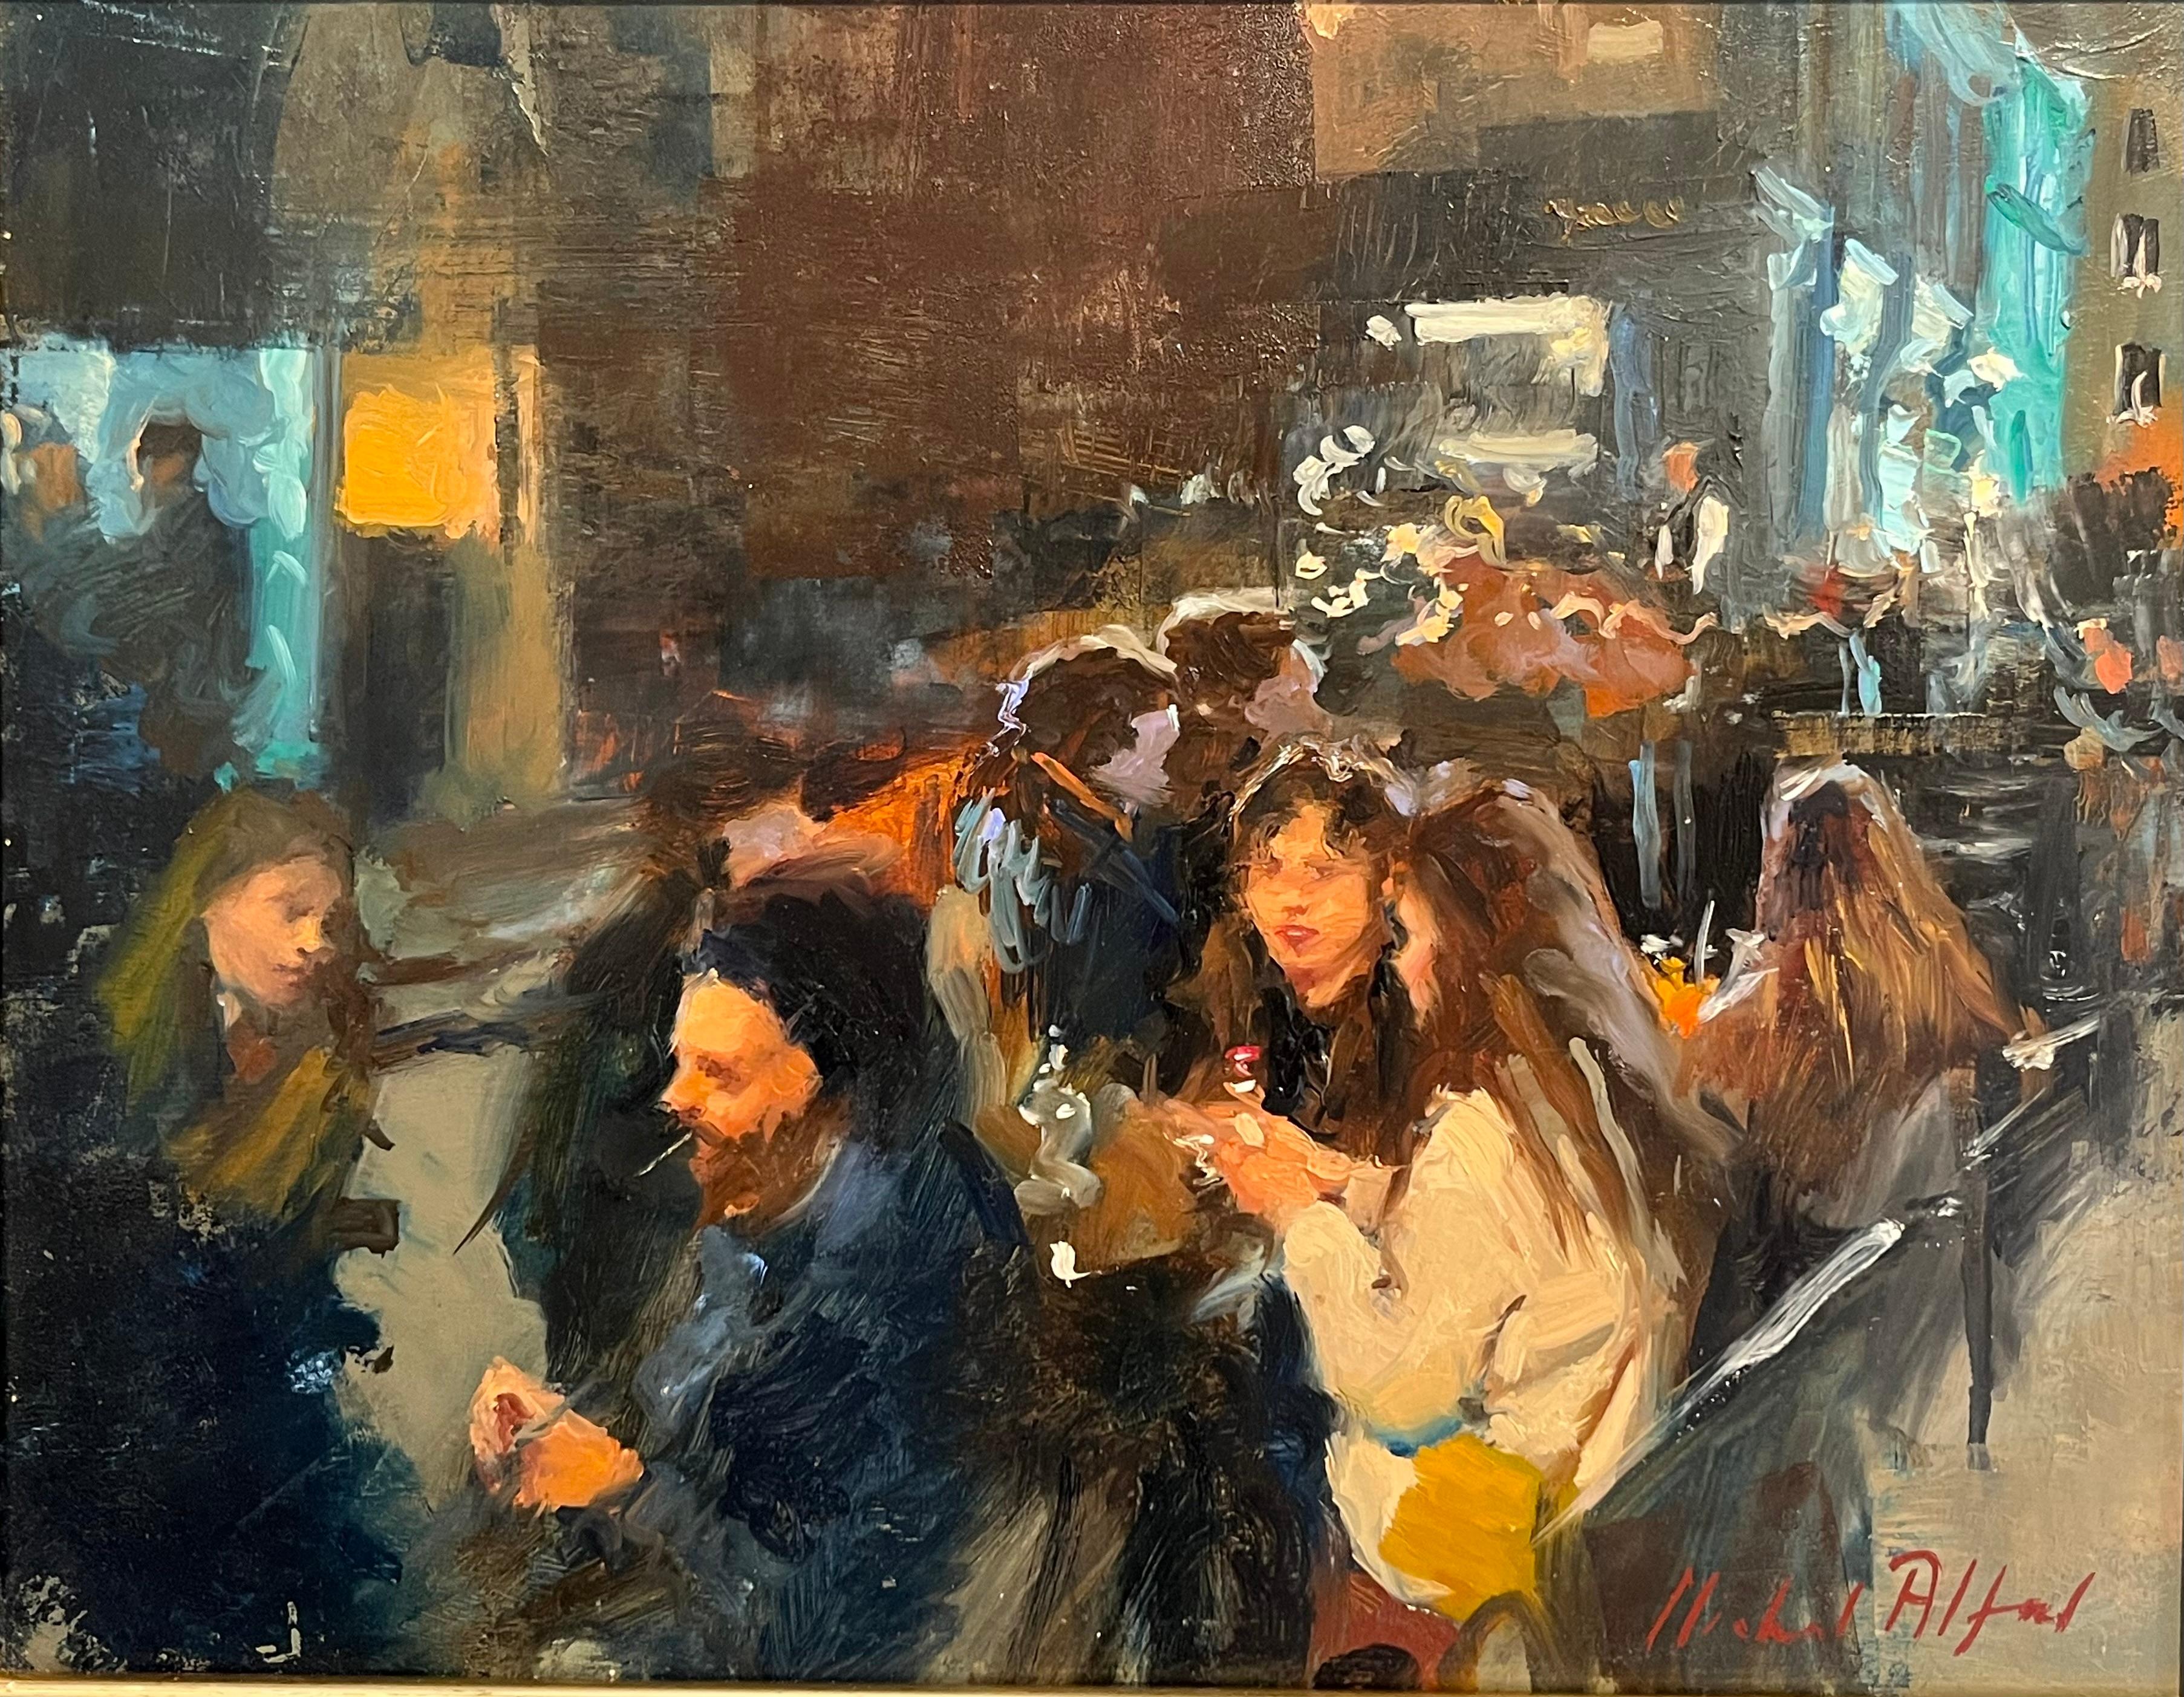 Figurative Painting Michael Alford - Outside Dining, West End-original impressionnisme - peinture figurative de paysage urbain 